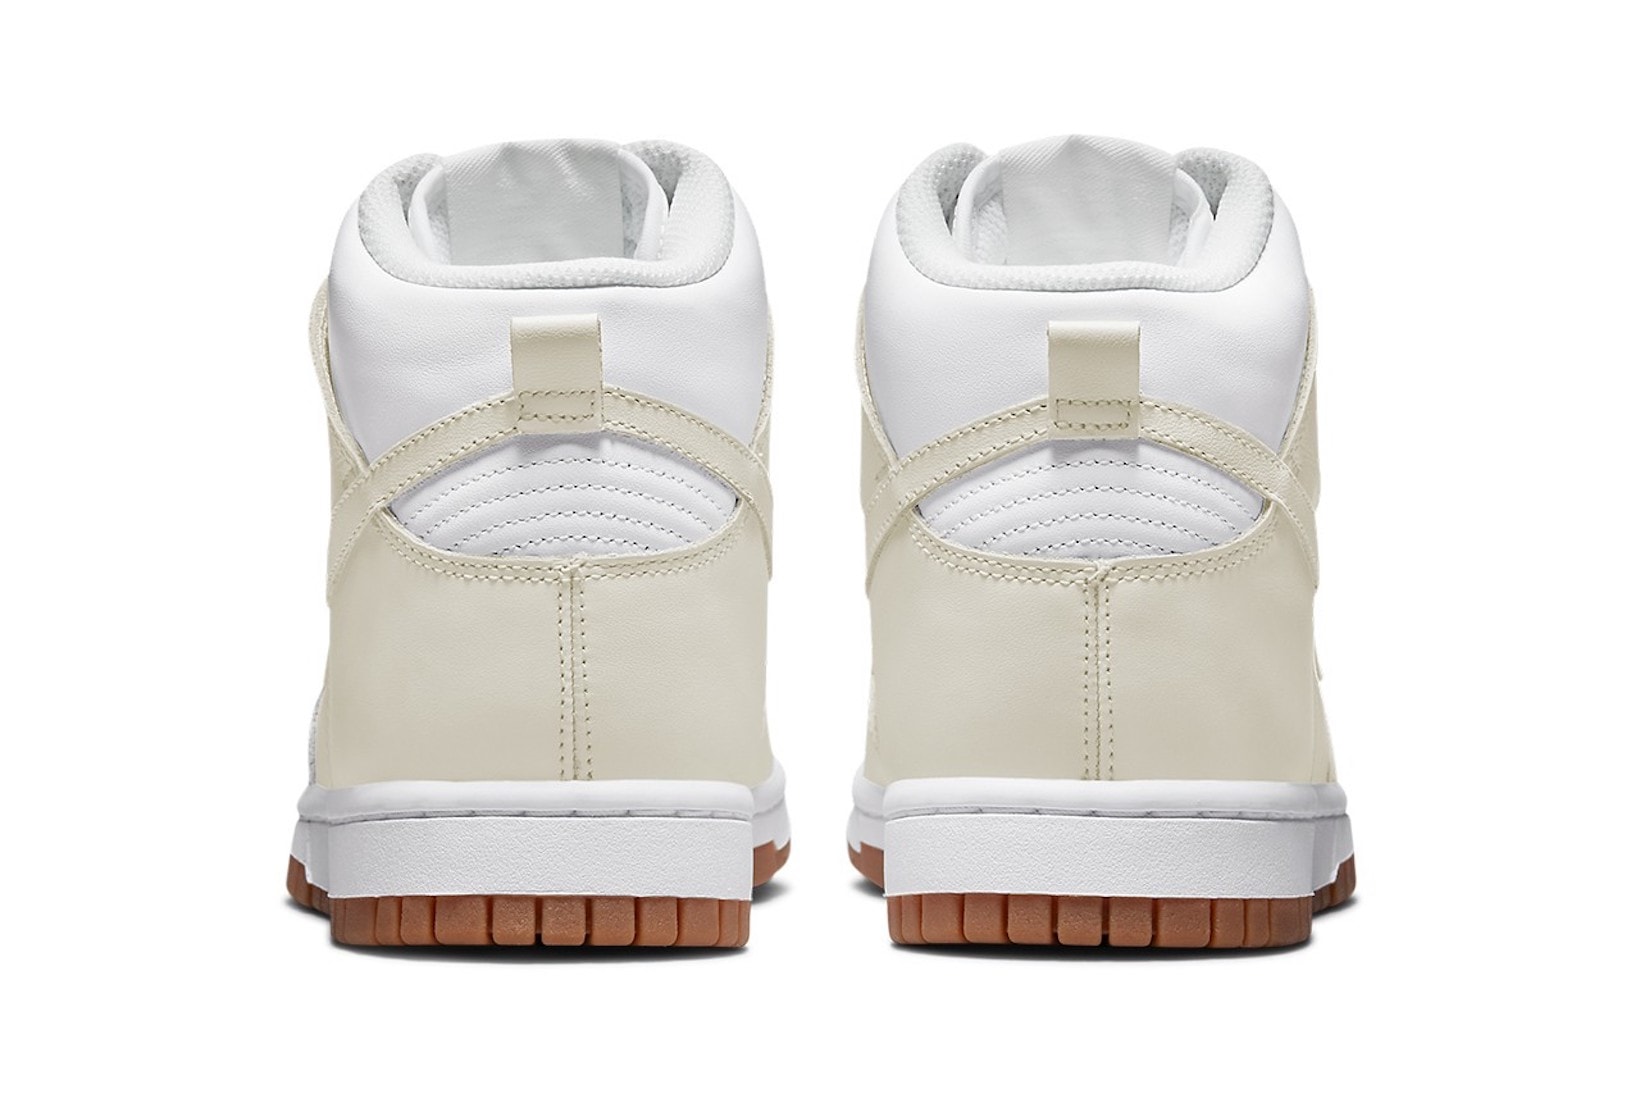 Nike Womens Sneakers Dunk High Sail Gum Cream White Footwear Kicks Shoes Heel